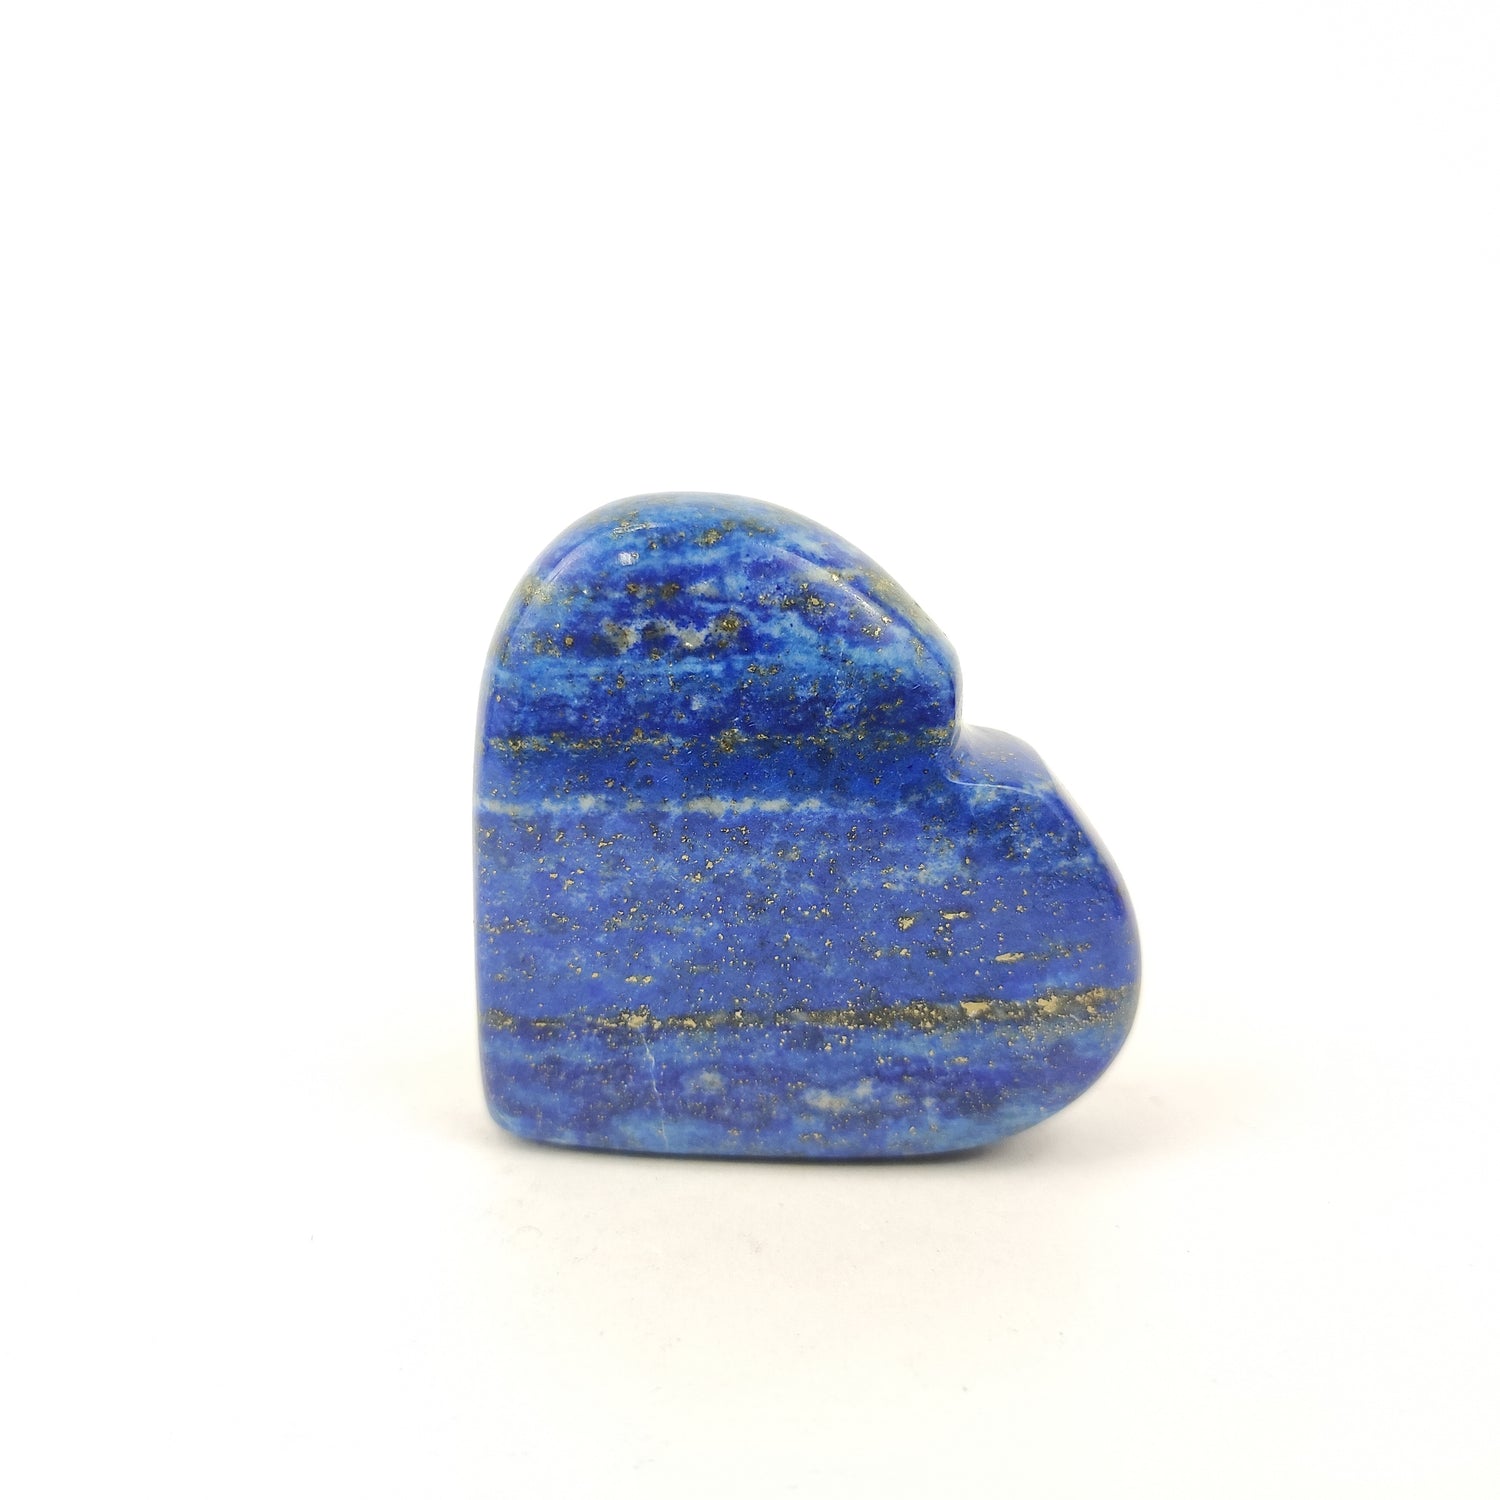 Lapis Lazuli Heart Shaped Crystal